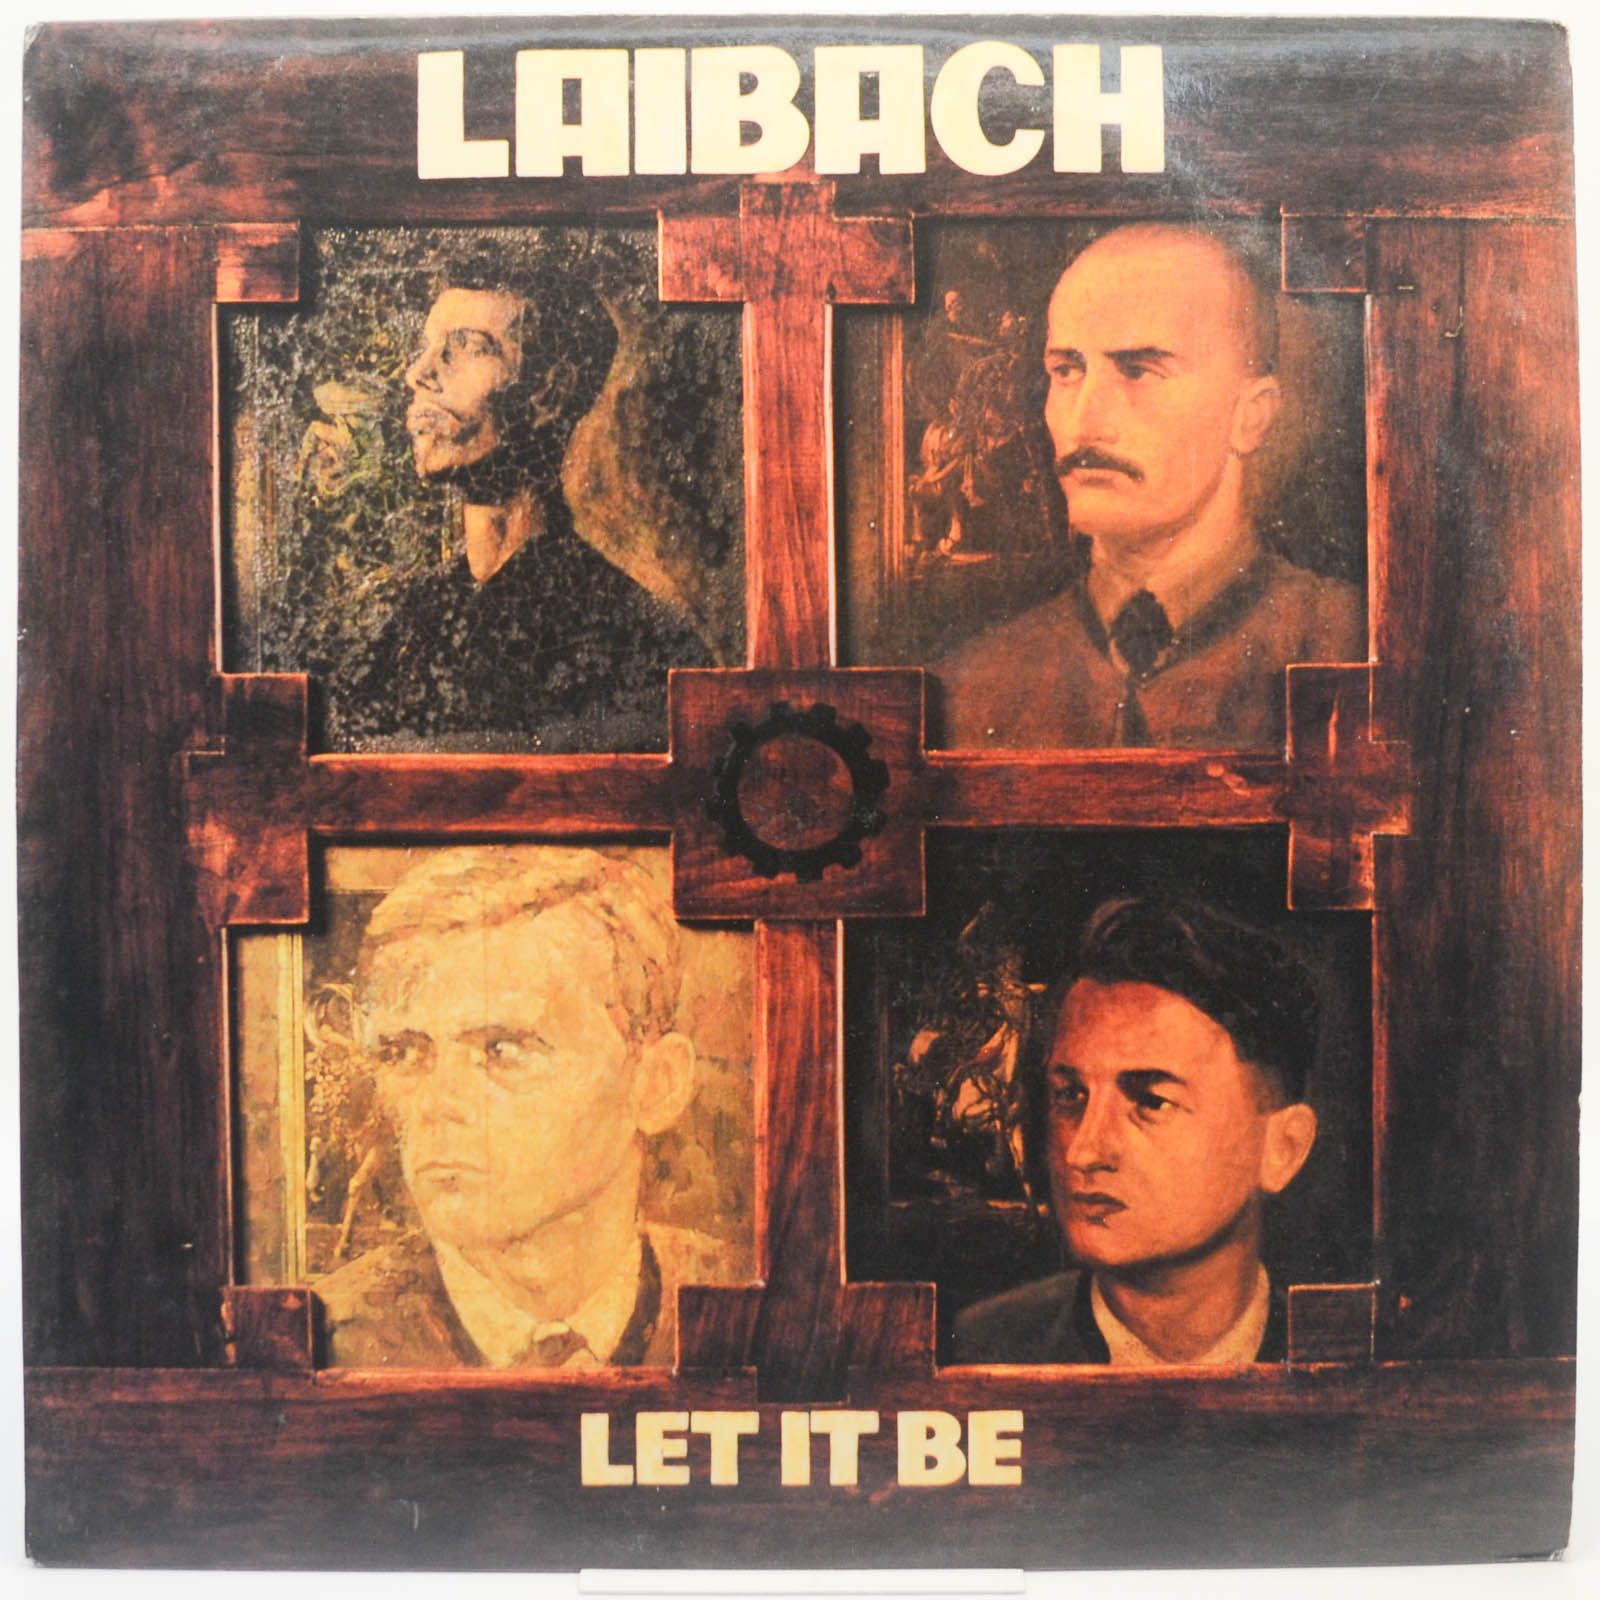 Laibach — Let It Be (USA), 1988